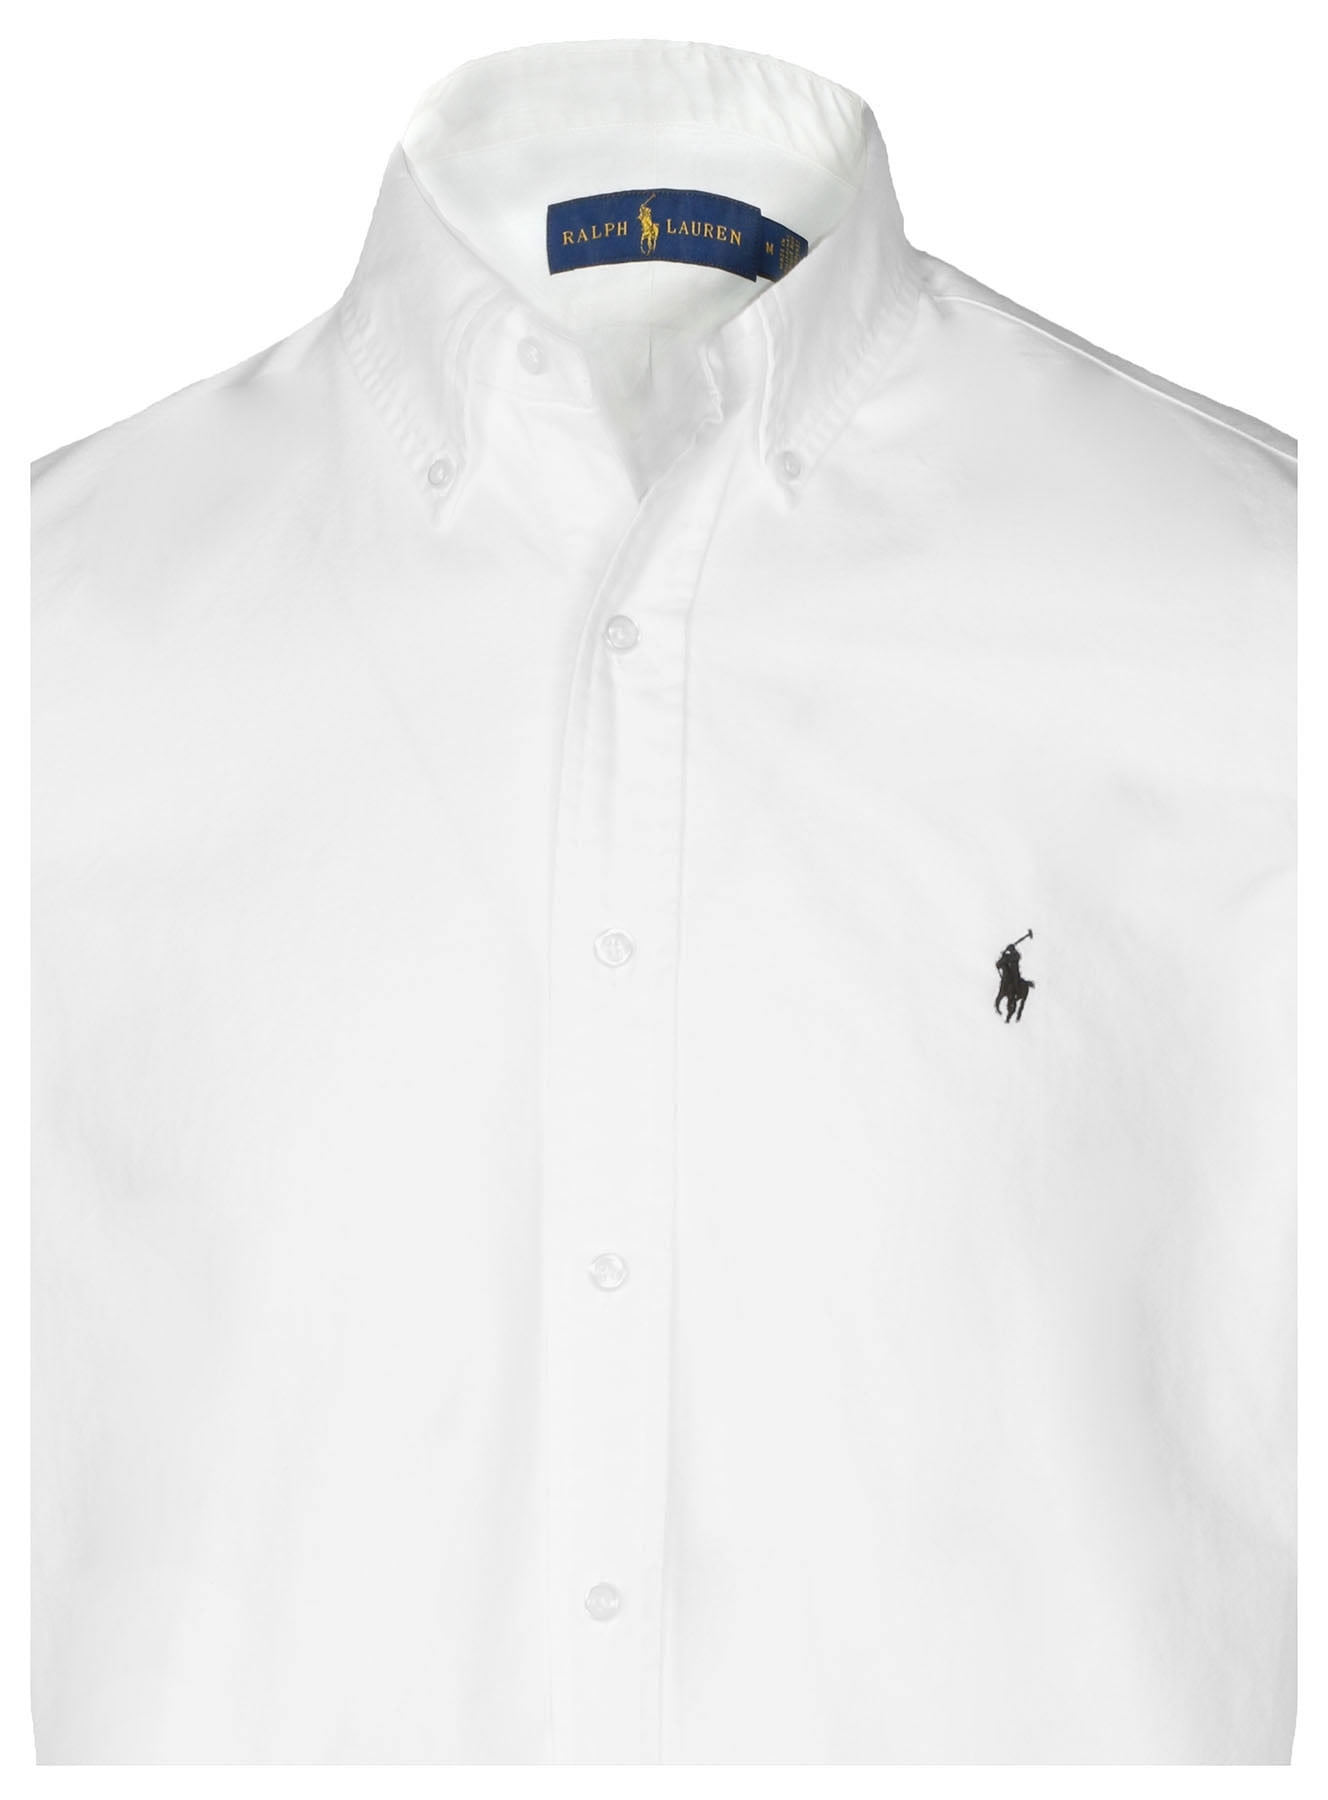 white short sleeve polo button down